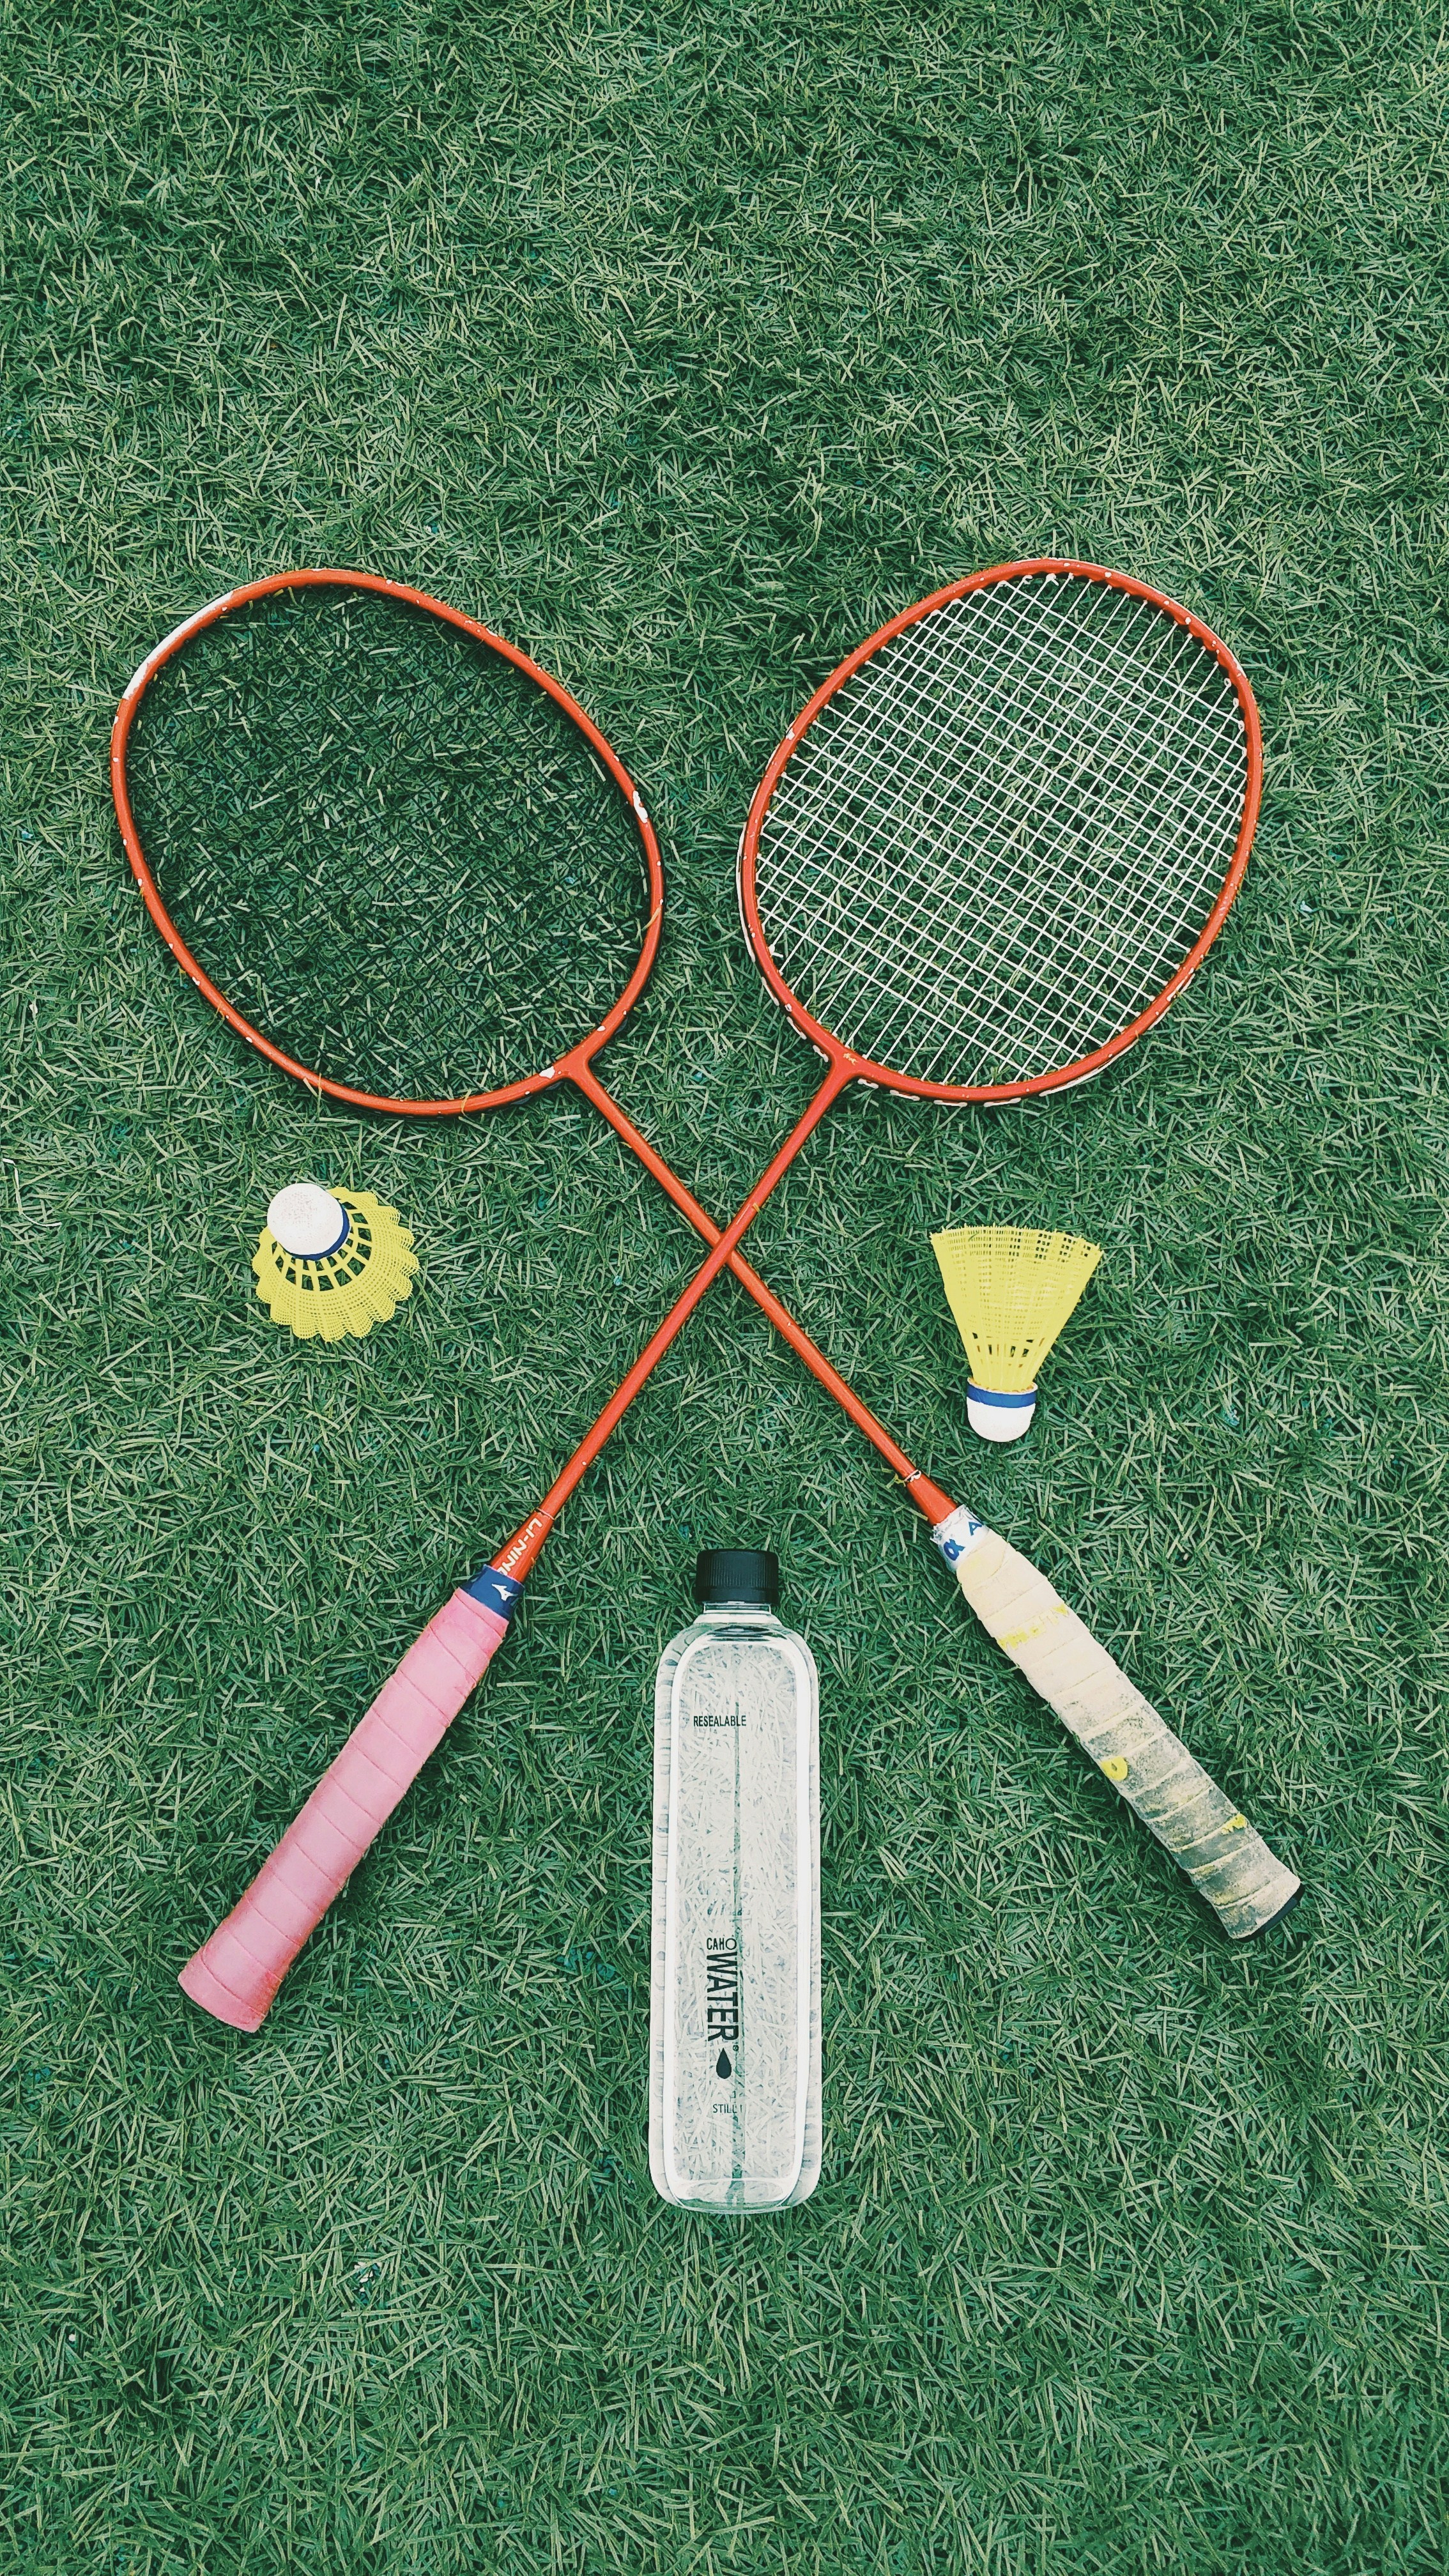 500+ Badminton Pictures HQ Download Free Images on Unsplash